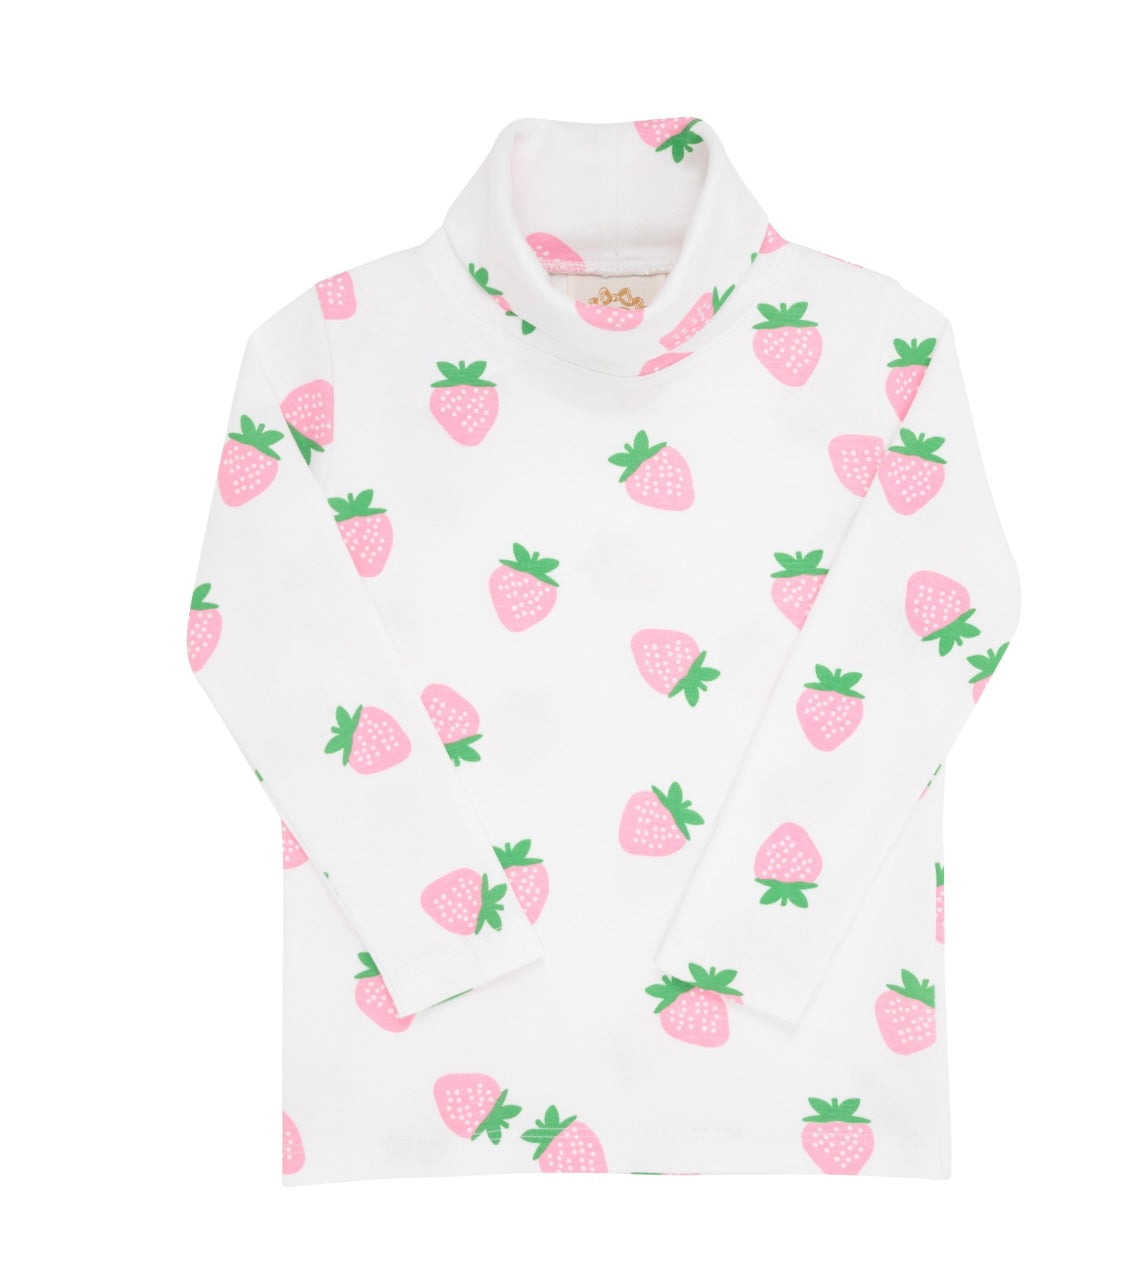 Tatum's Turtleneck Shirt - Sanibel Strawberry (White)